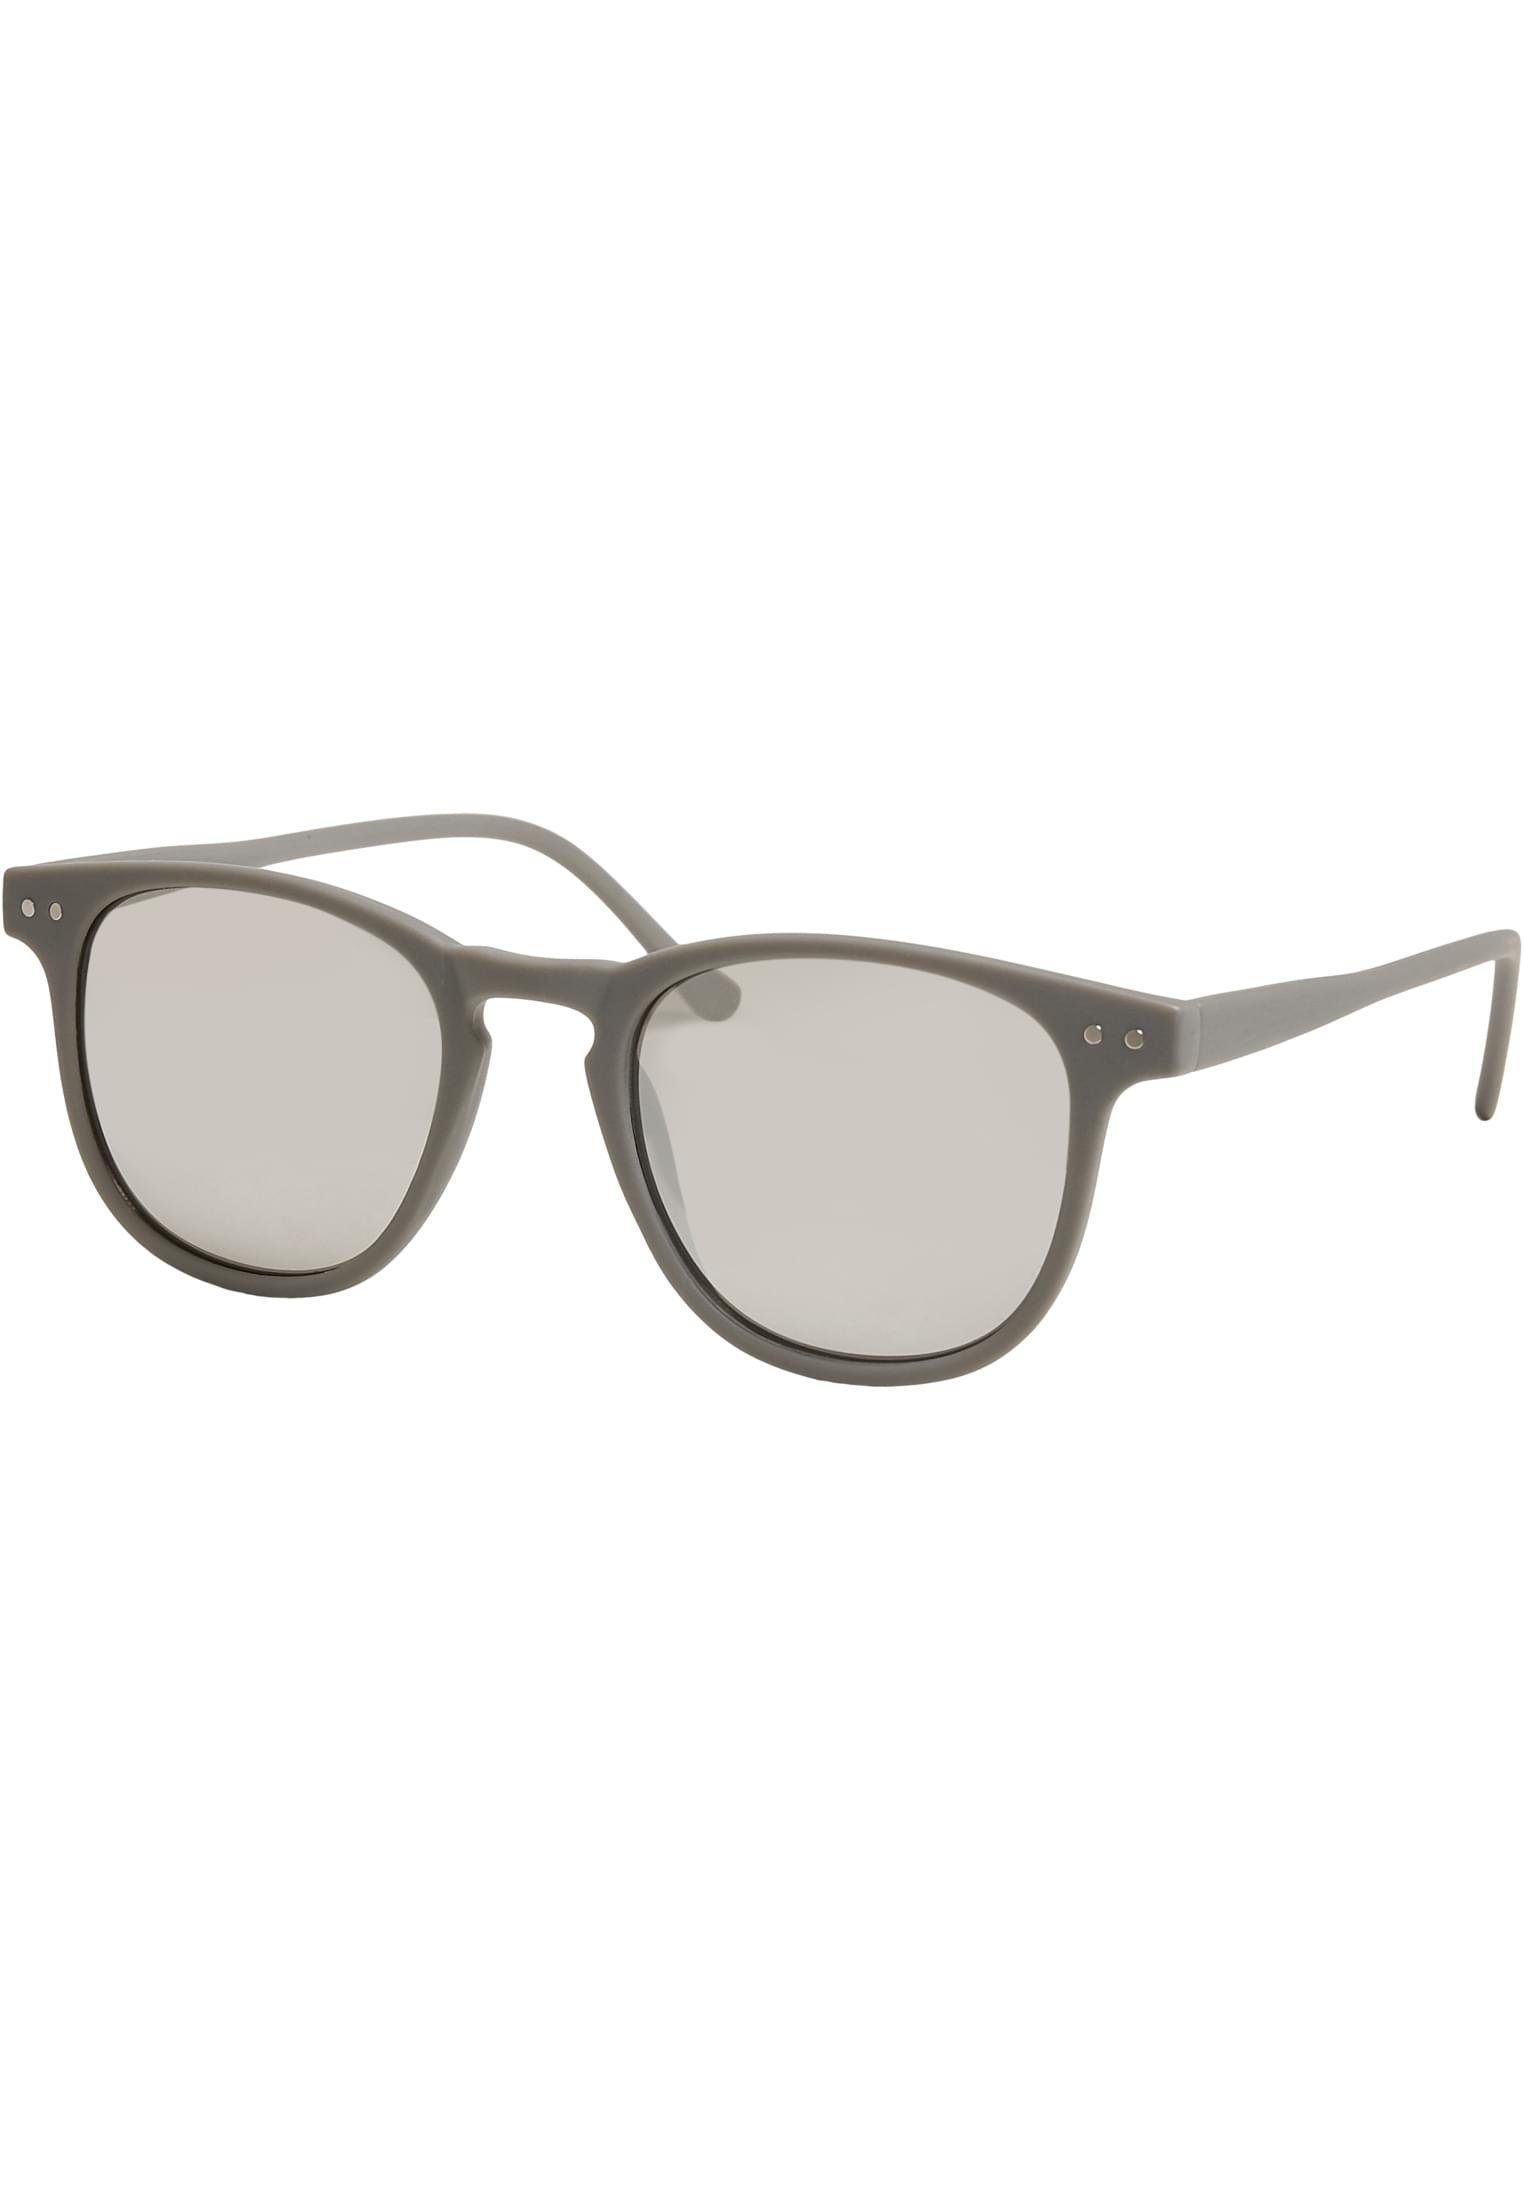 Unisex Sunglasses with Chain CLASSICS grey/silver Arthur Sonnenbrille URBAN